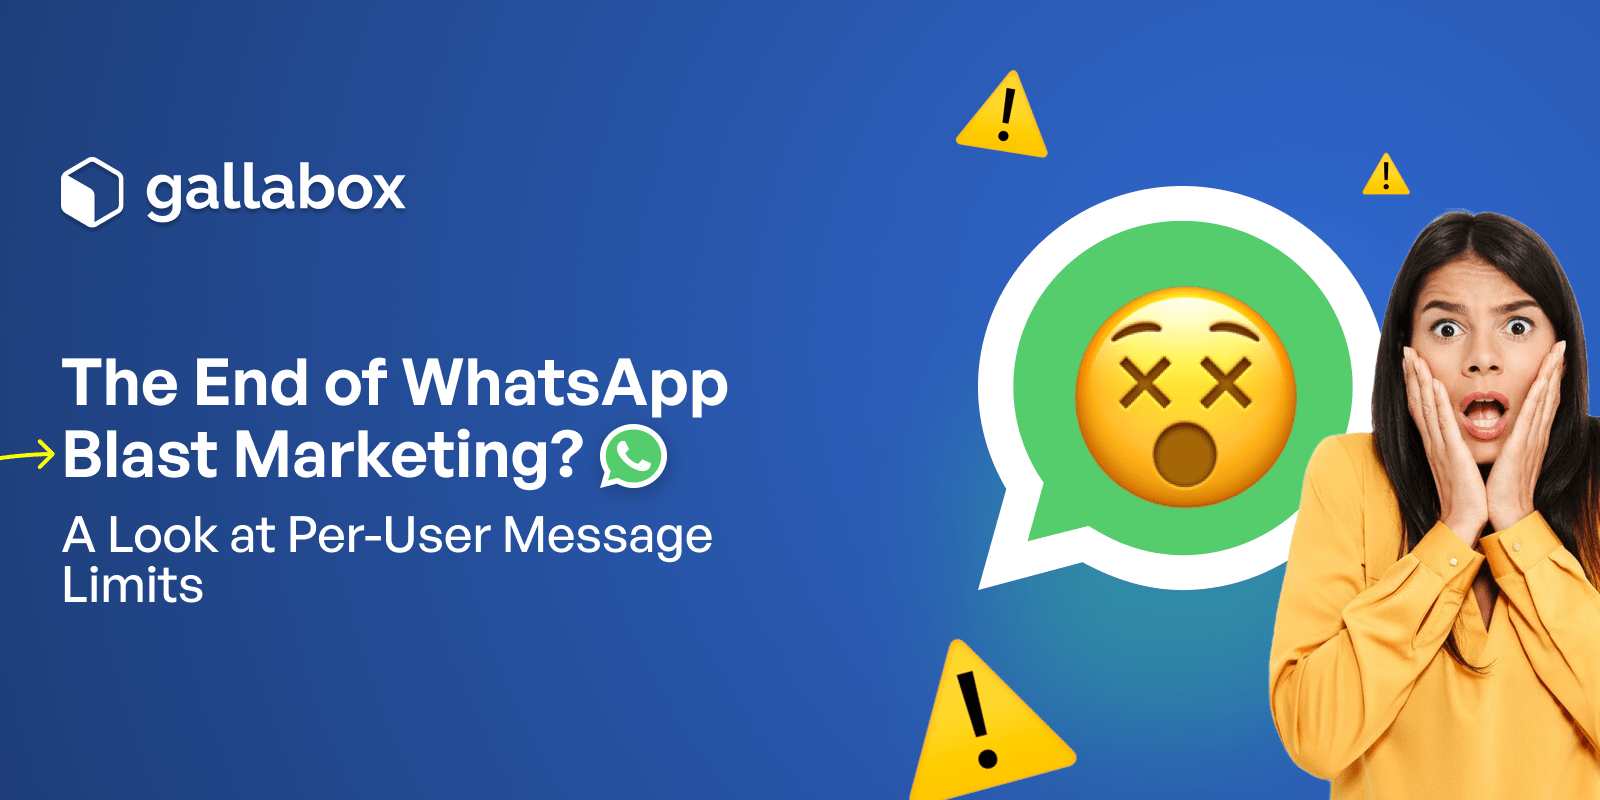 The End of WhatsApp Blast Marketing?